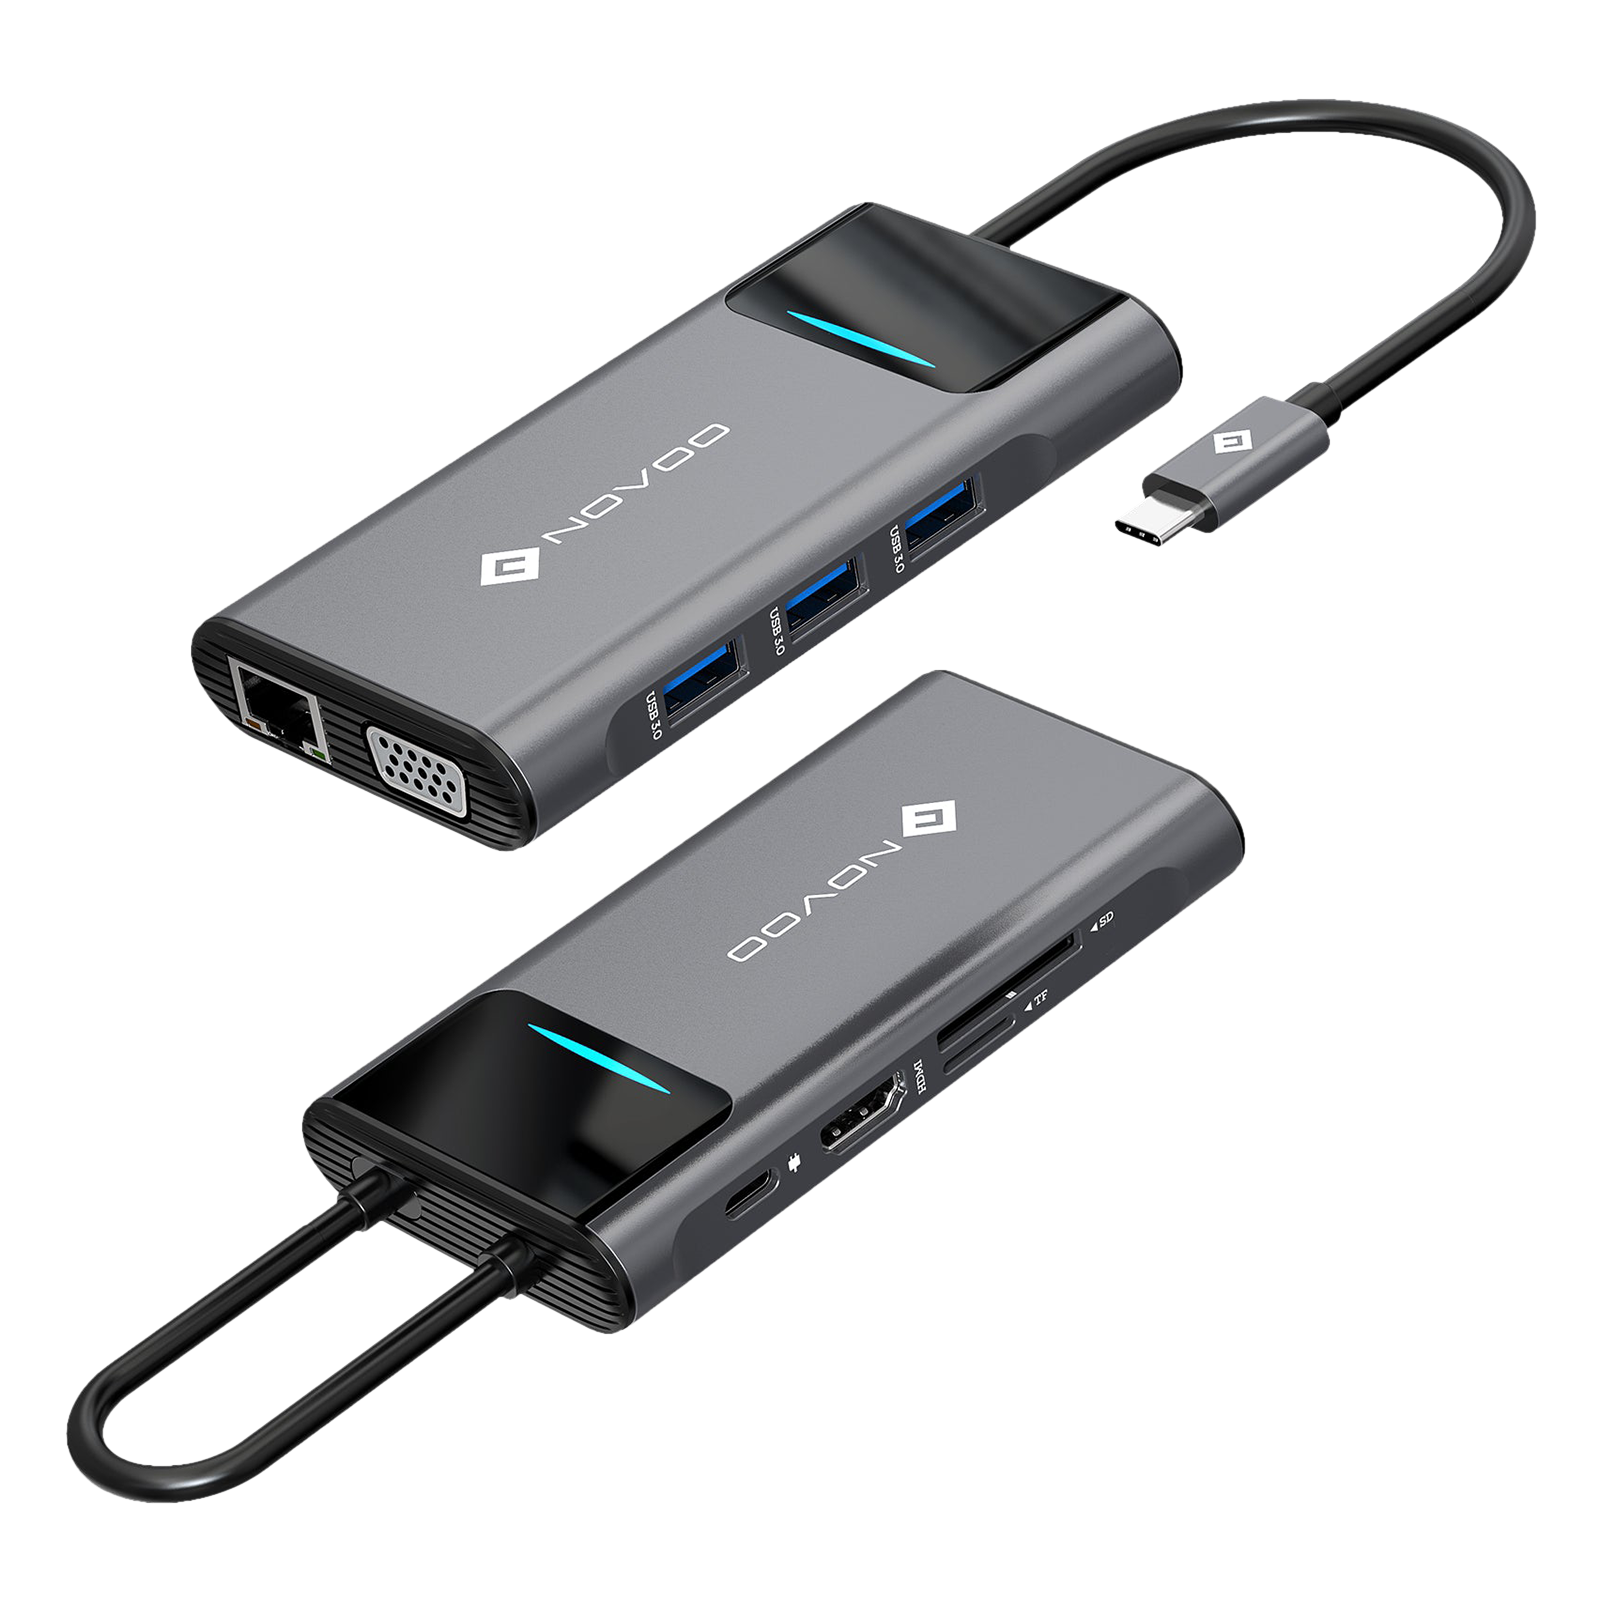 Novoo 9 in 1 Pro USB 3.0 (Type-C) to USB 3.0 Multi-Port Hub (1000W PD Port, NVHUBSN09PLX-RM, Grey)